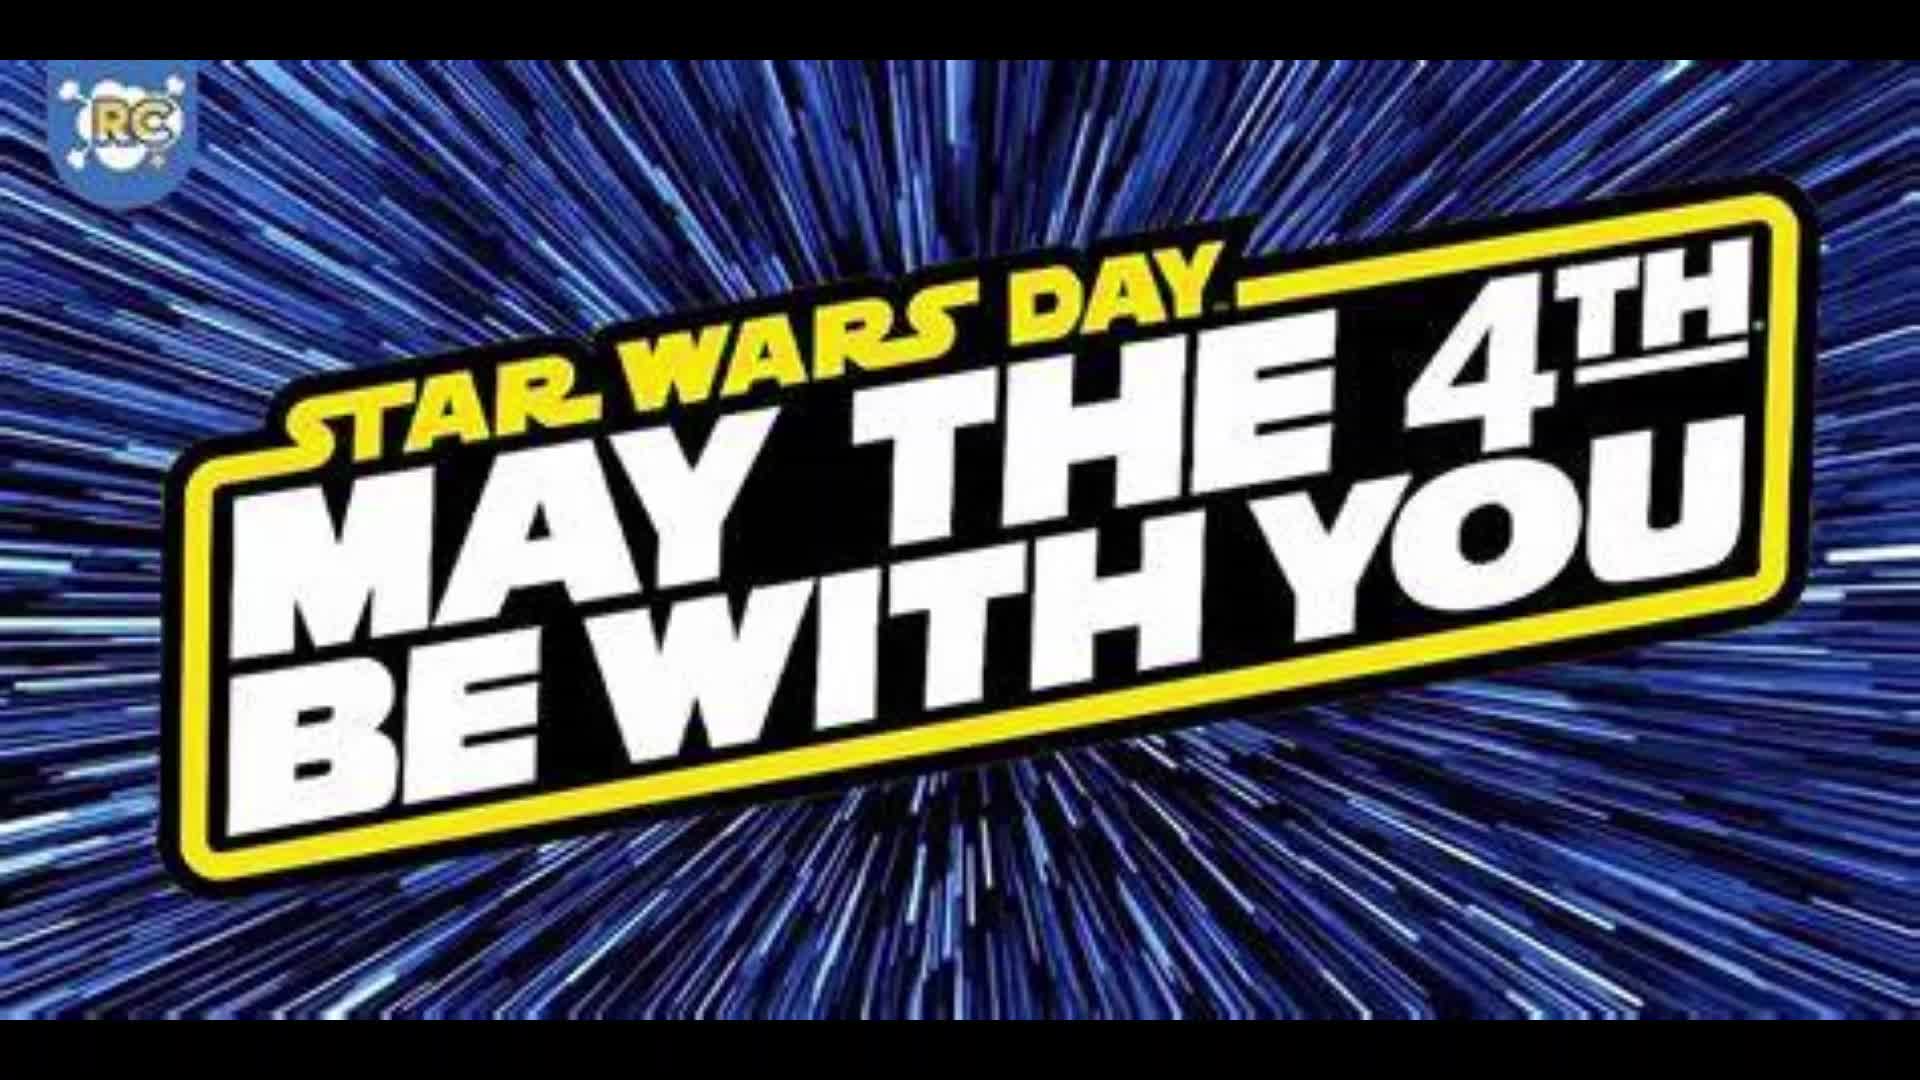 Happy Star Wars Day, everybody!